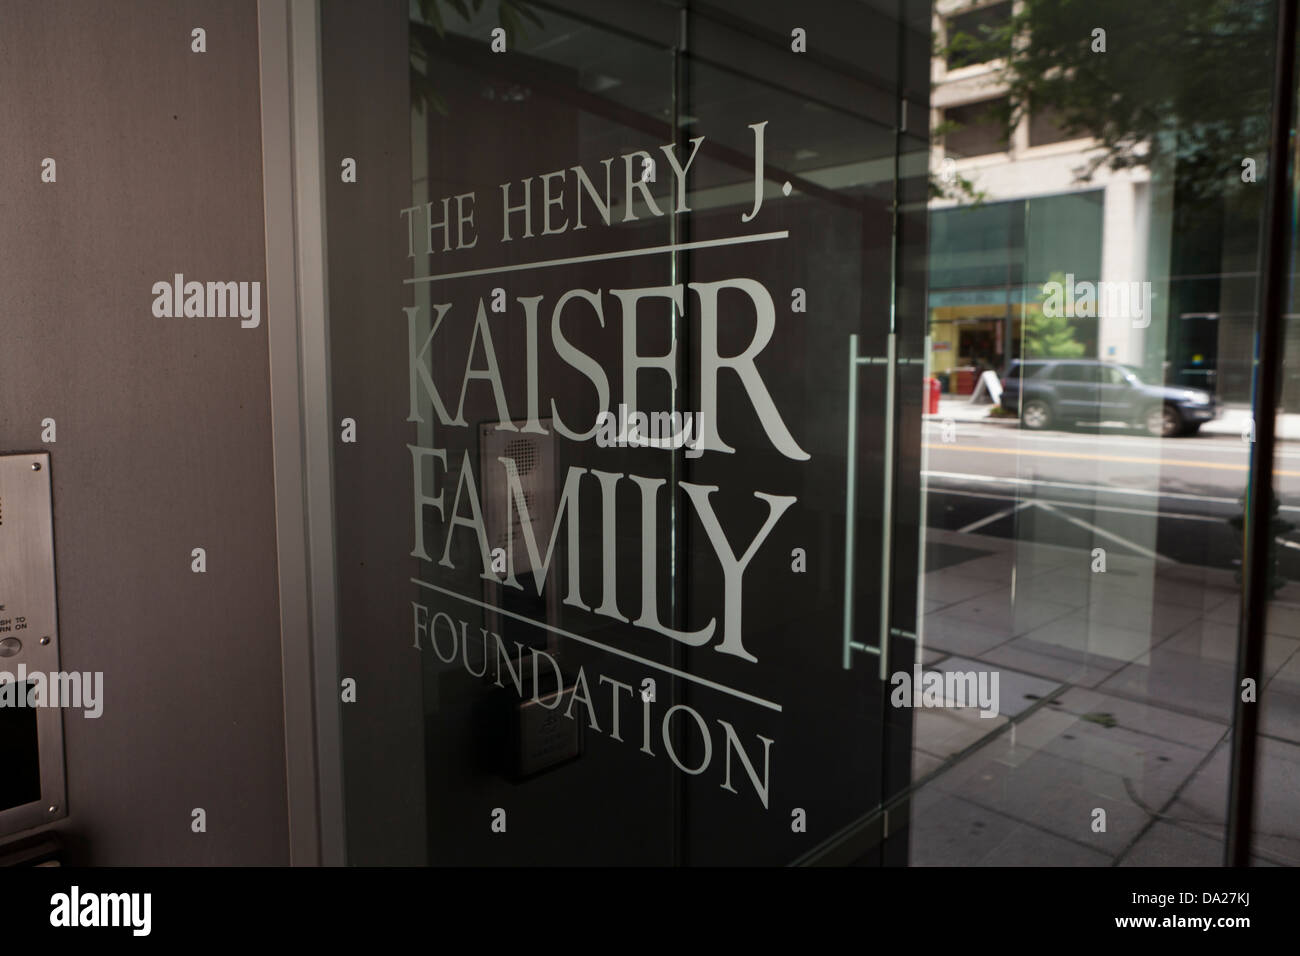 The Henry J Kaiser Family Foundation building, Washington DC Stock Photo